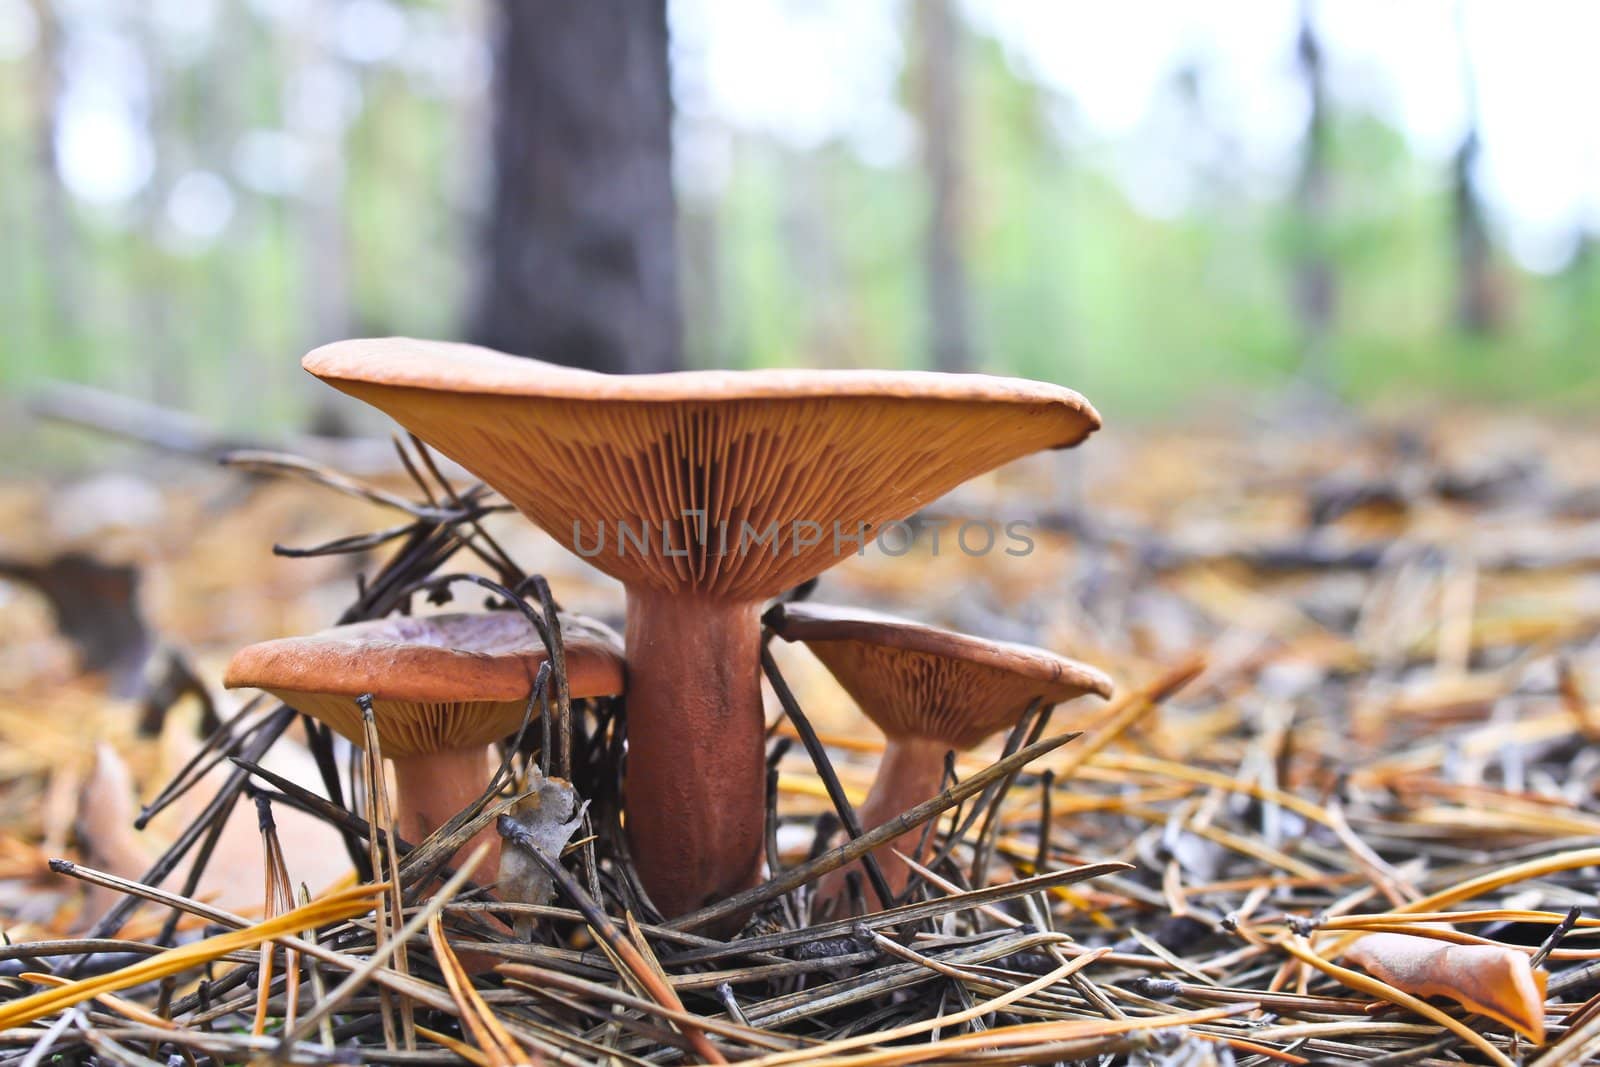  mushrooms by aziatik13